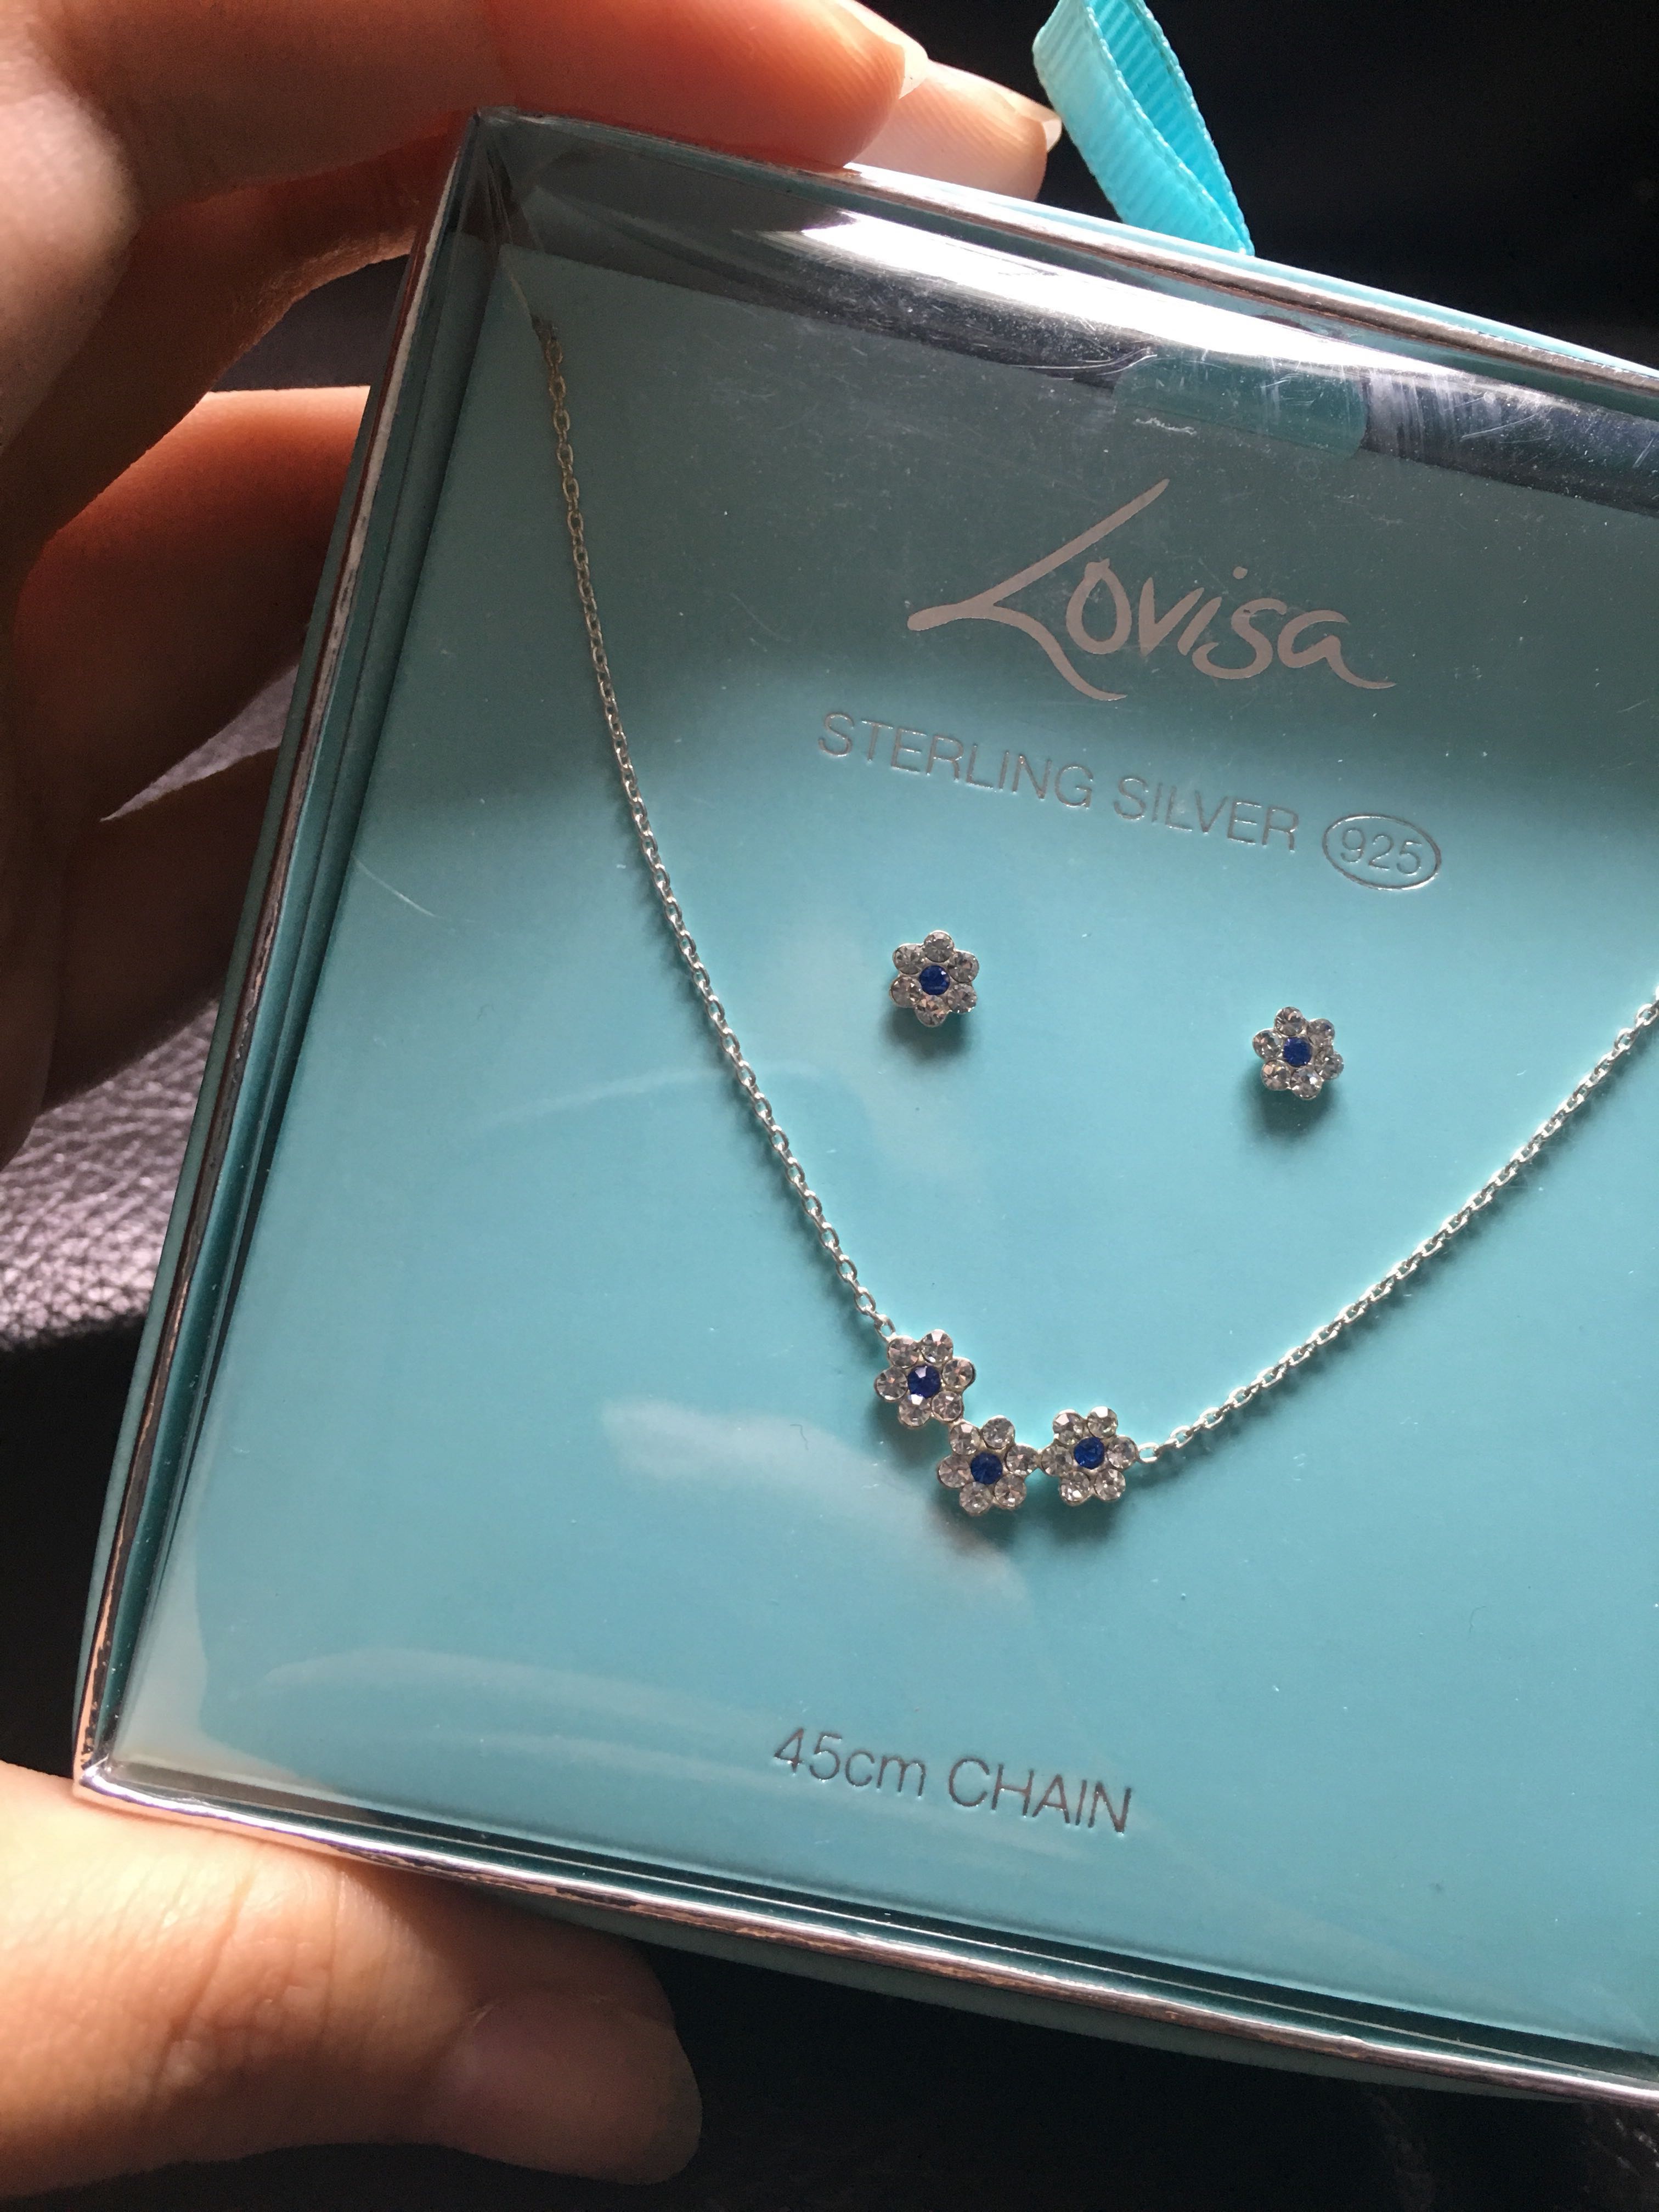 Discover 157+ lovisa crystal necklace best